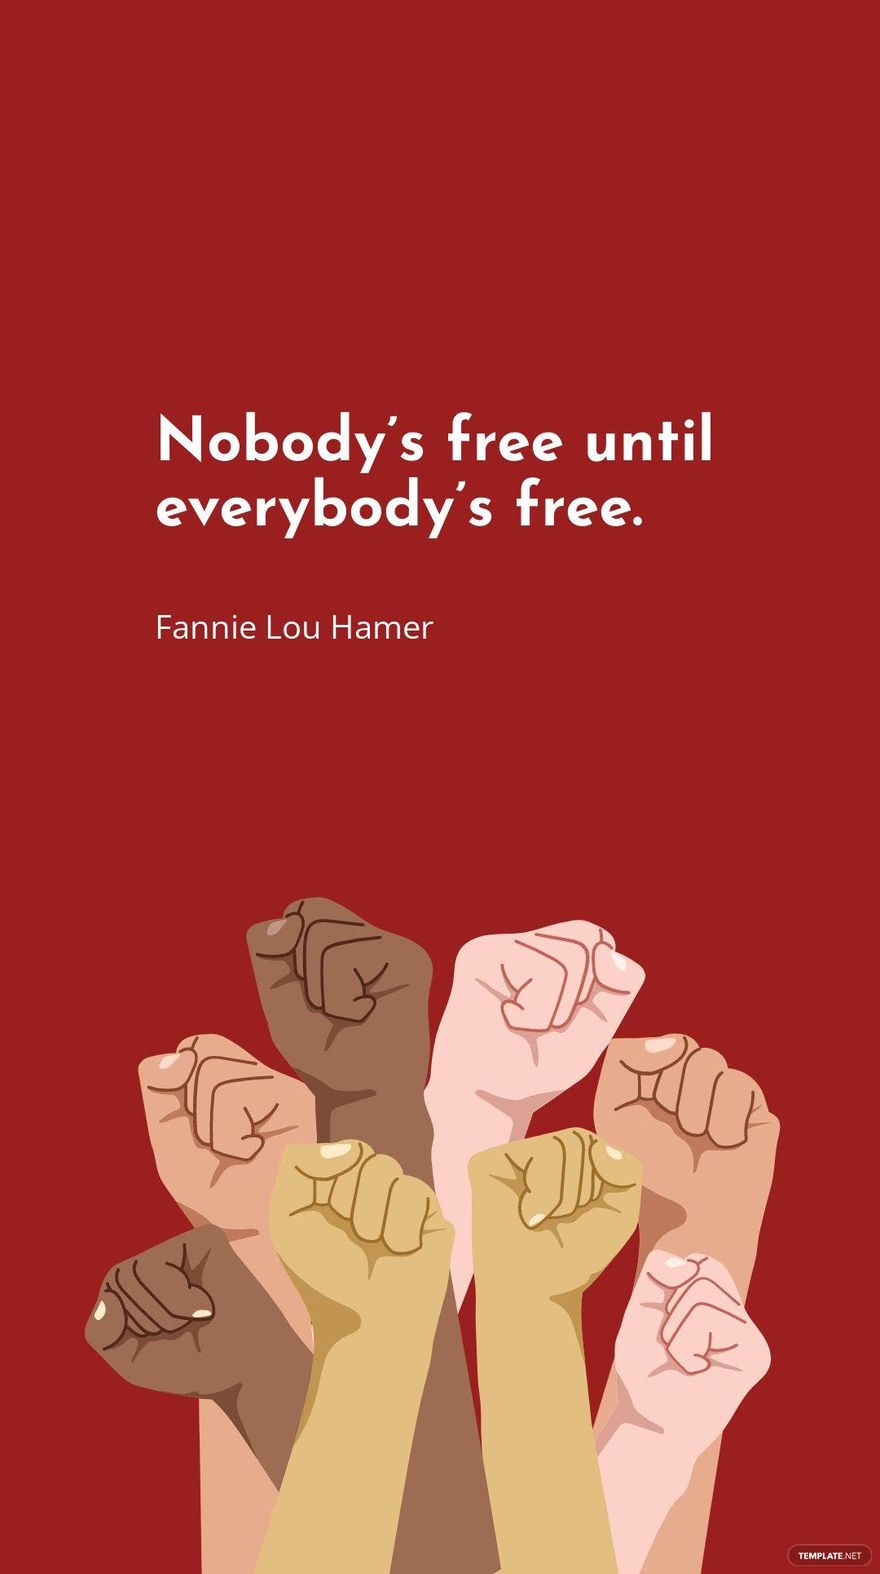 Fannie Lou Hamer - Nobody’s until everybody’s